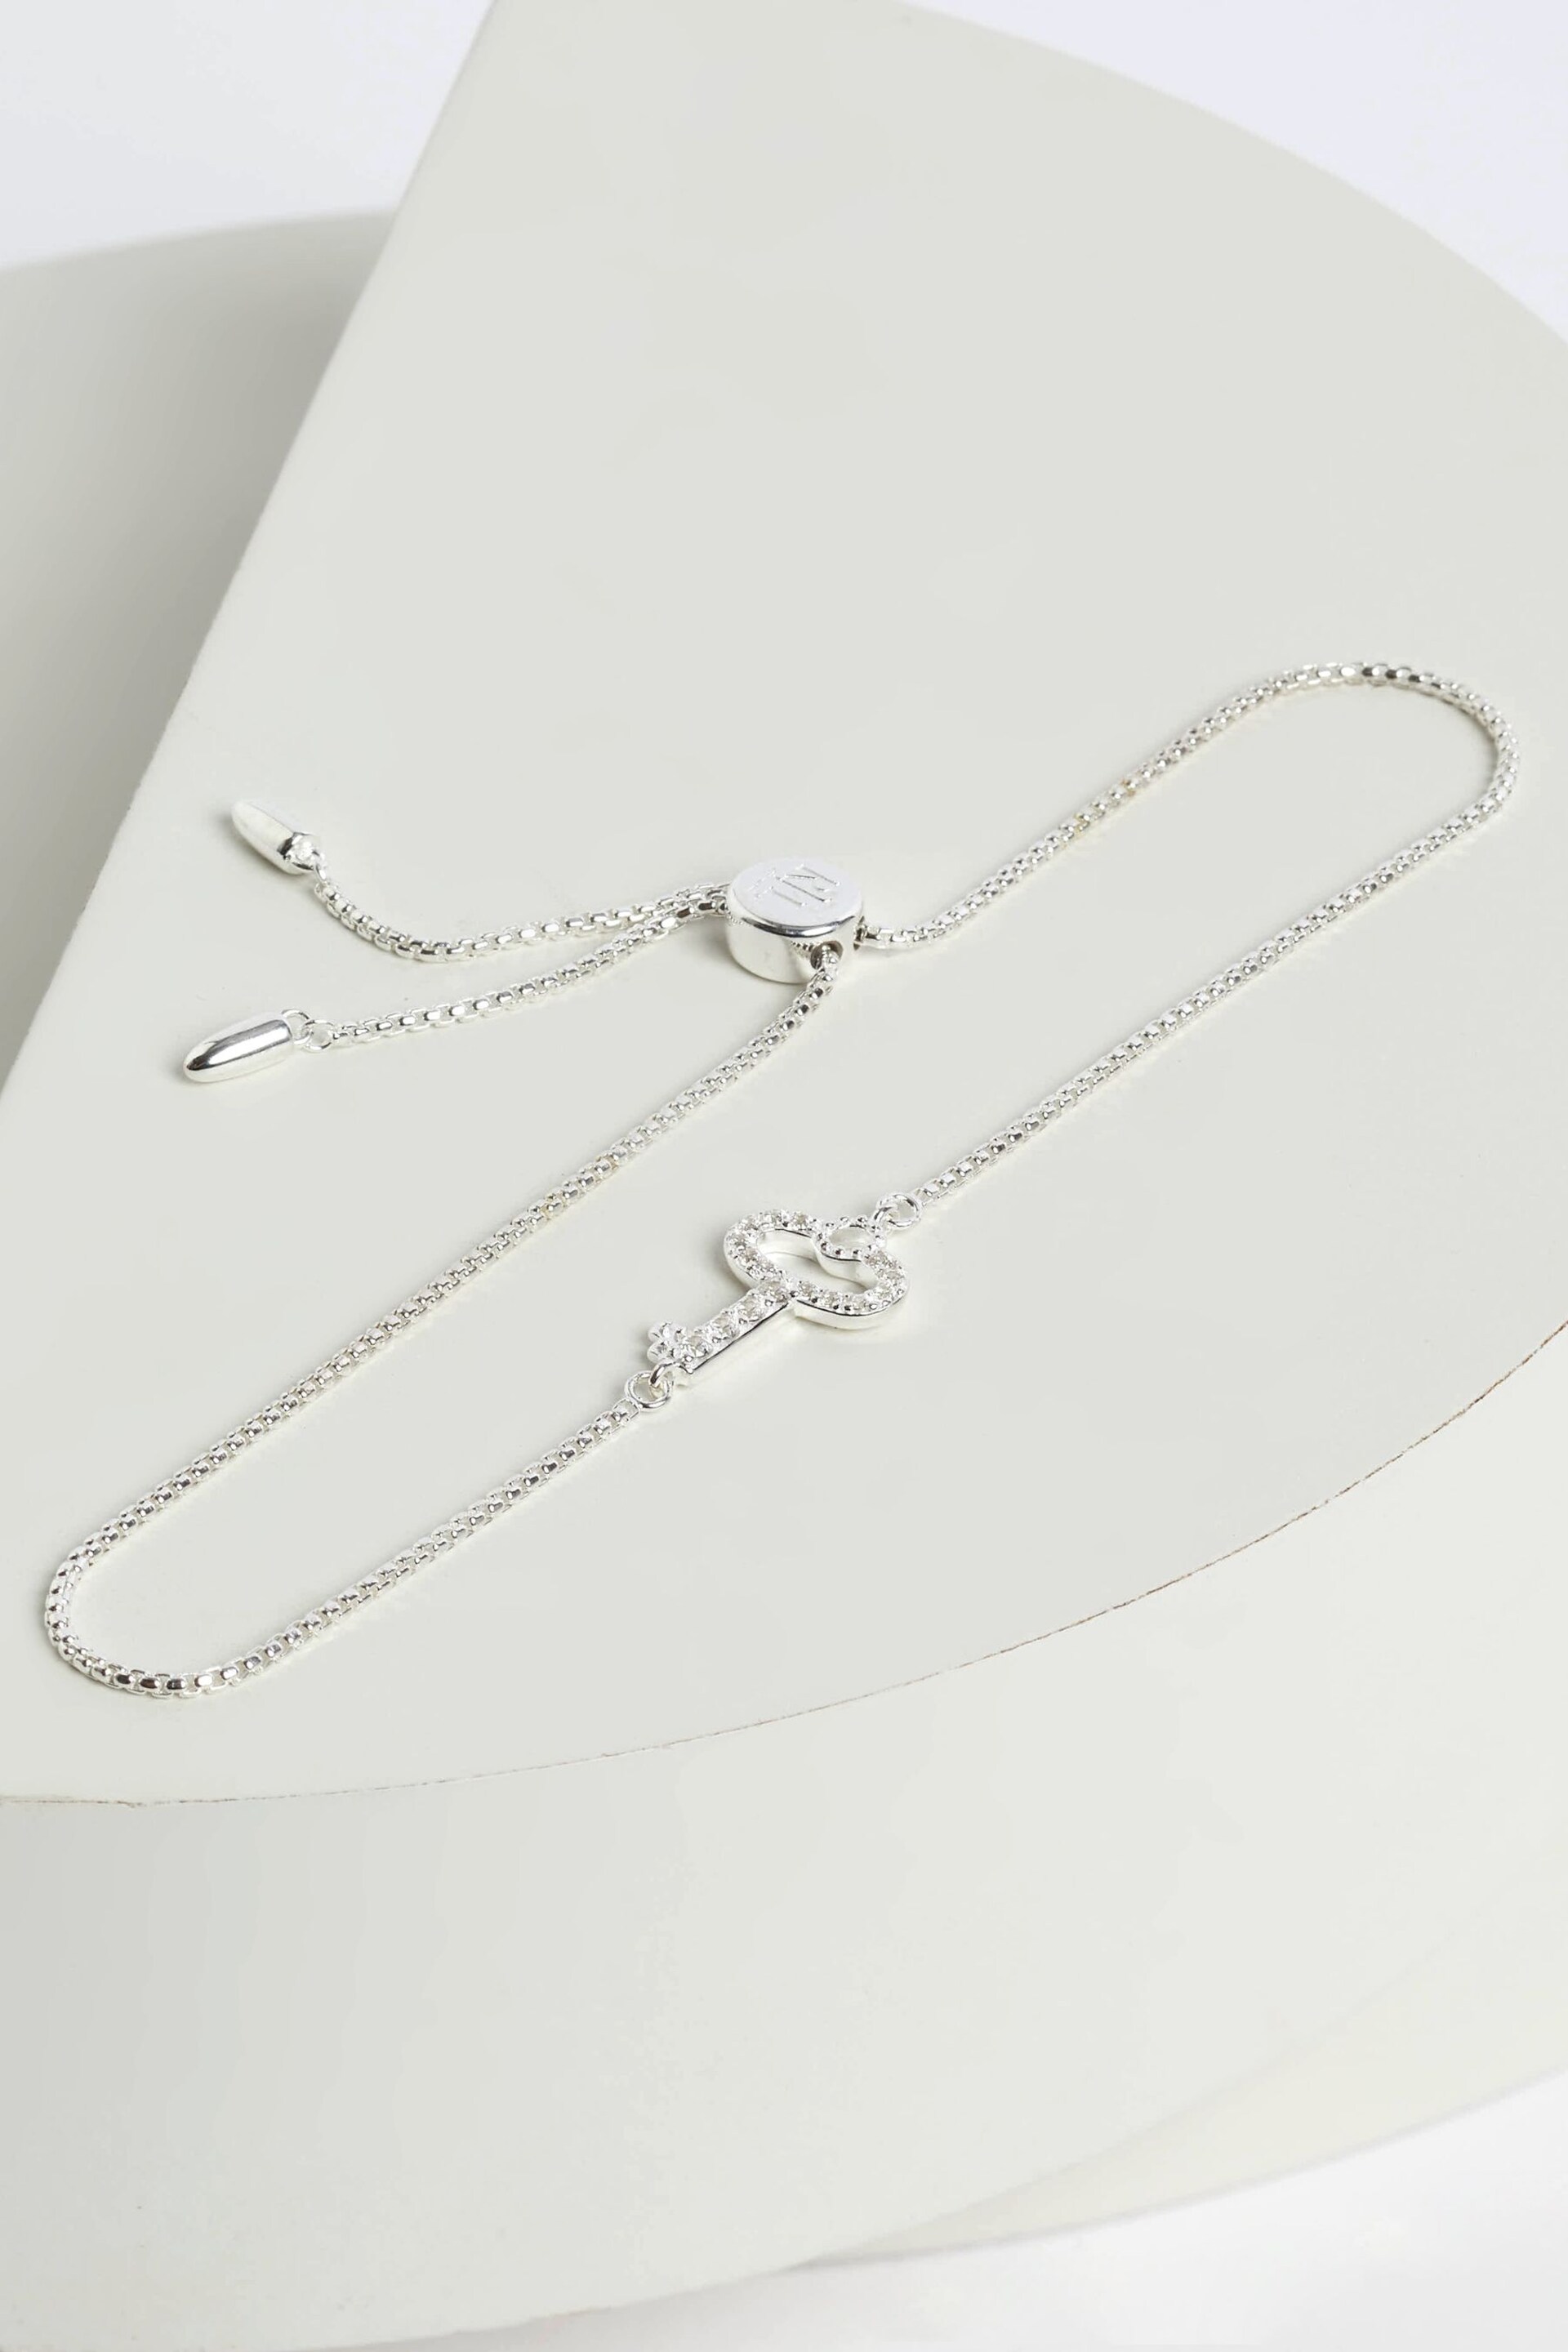 Lauren Ralph Lauren Sterling Silver Crystal Key Slider Bracelet - Image 2 of 4